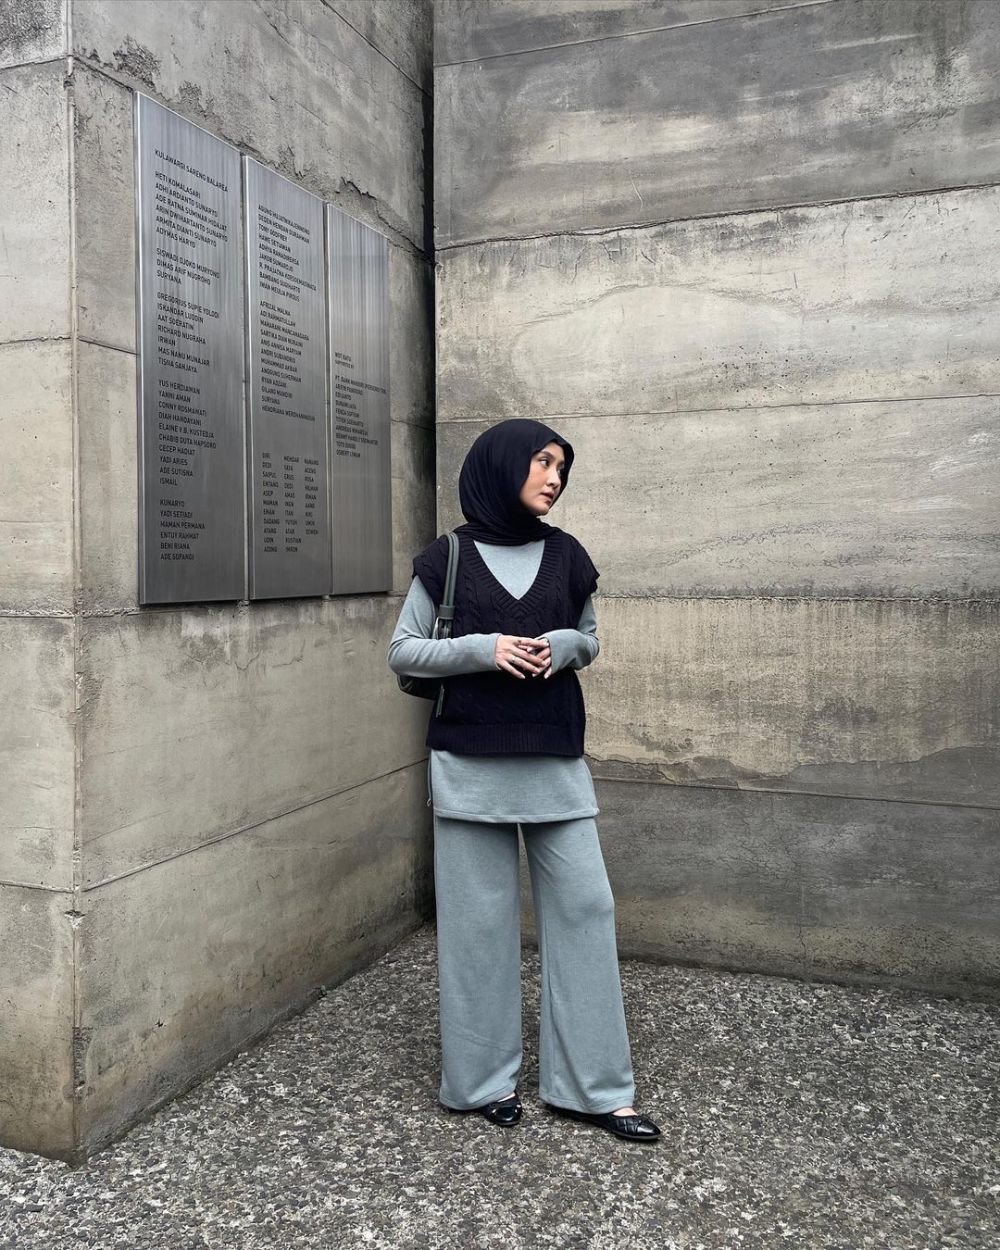 10 OOTD Hijab dengan Vest Hitam ala Inas Rana yang Anti Boring!